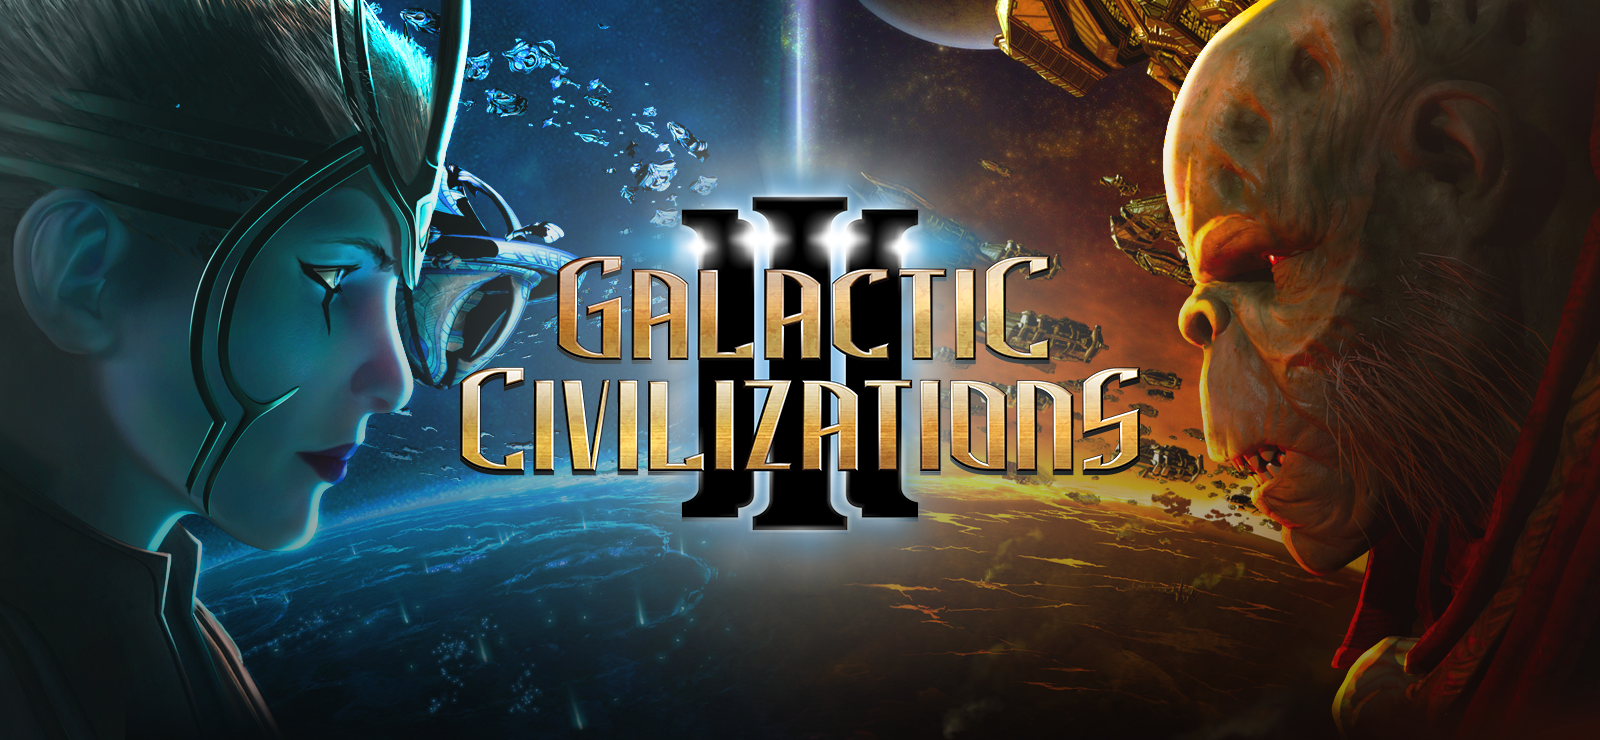 Galactic Civilizations III